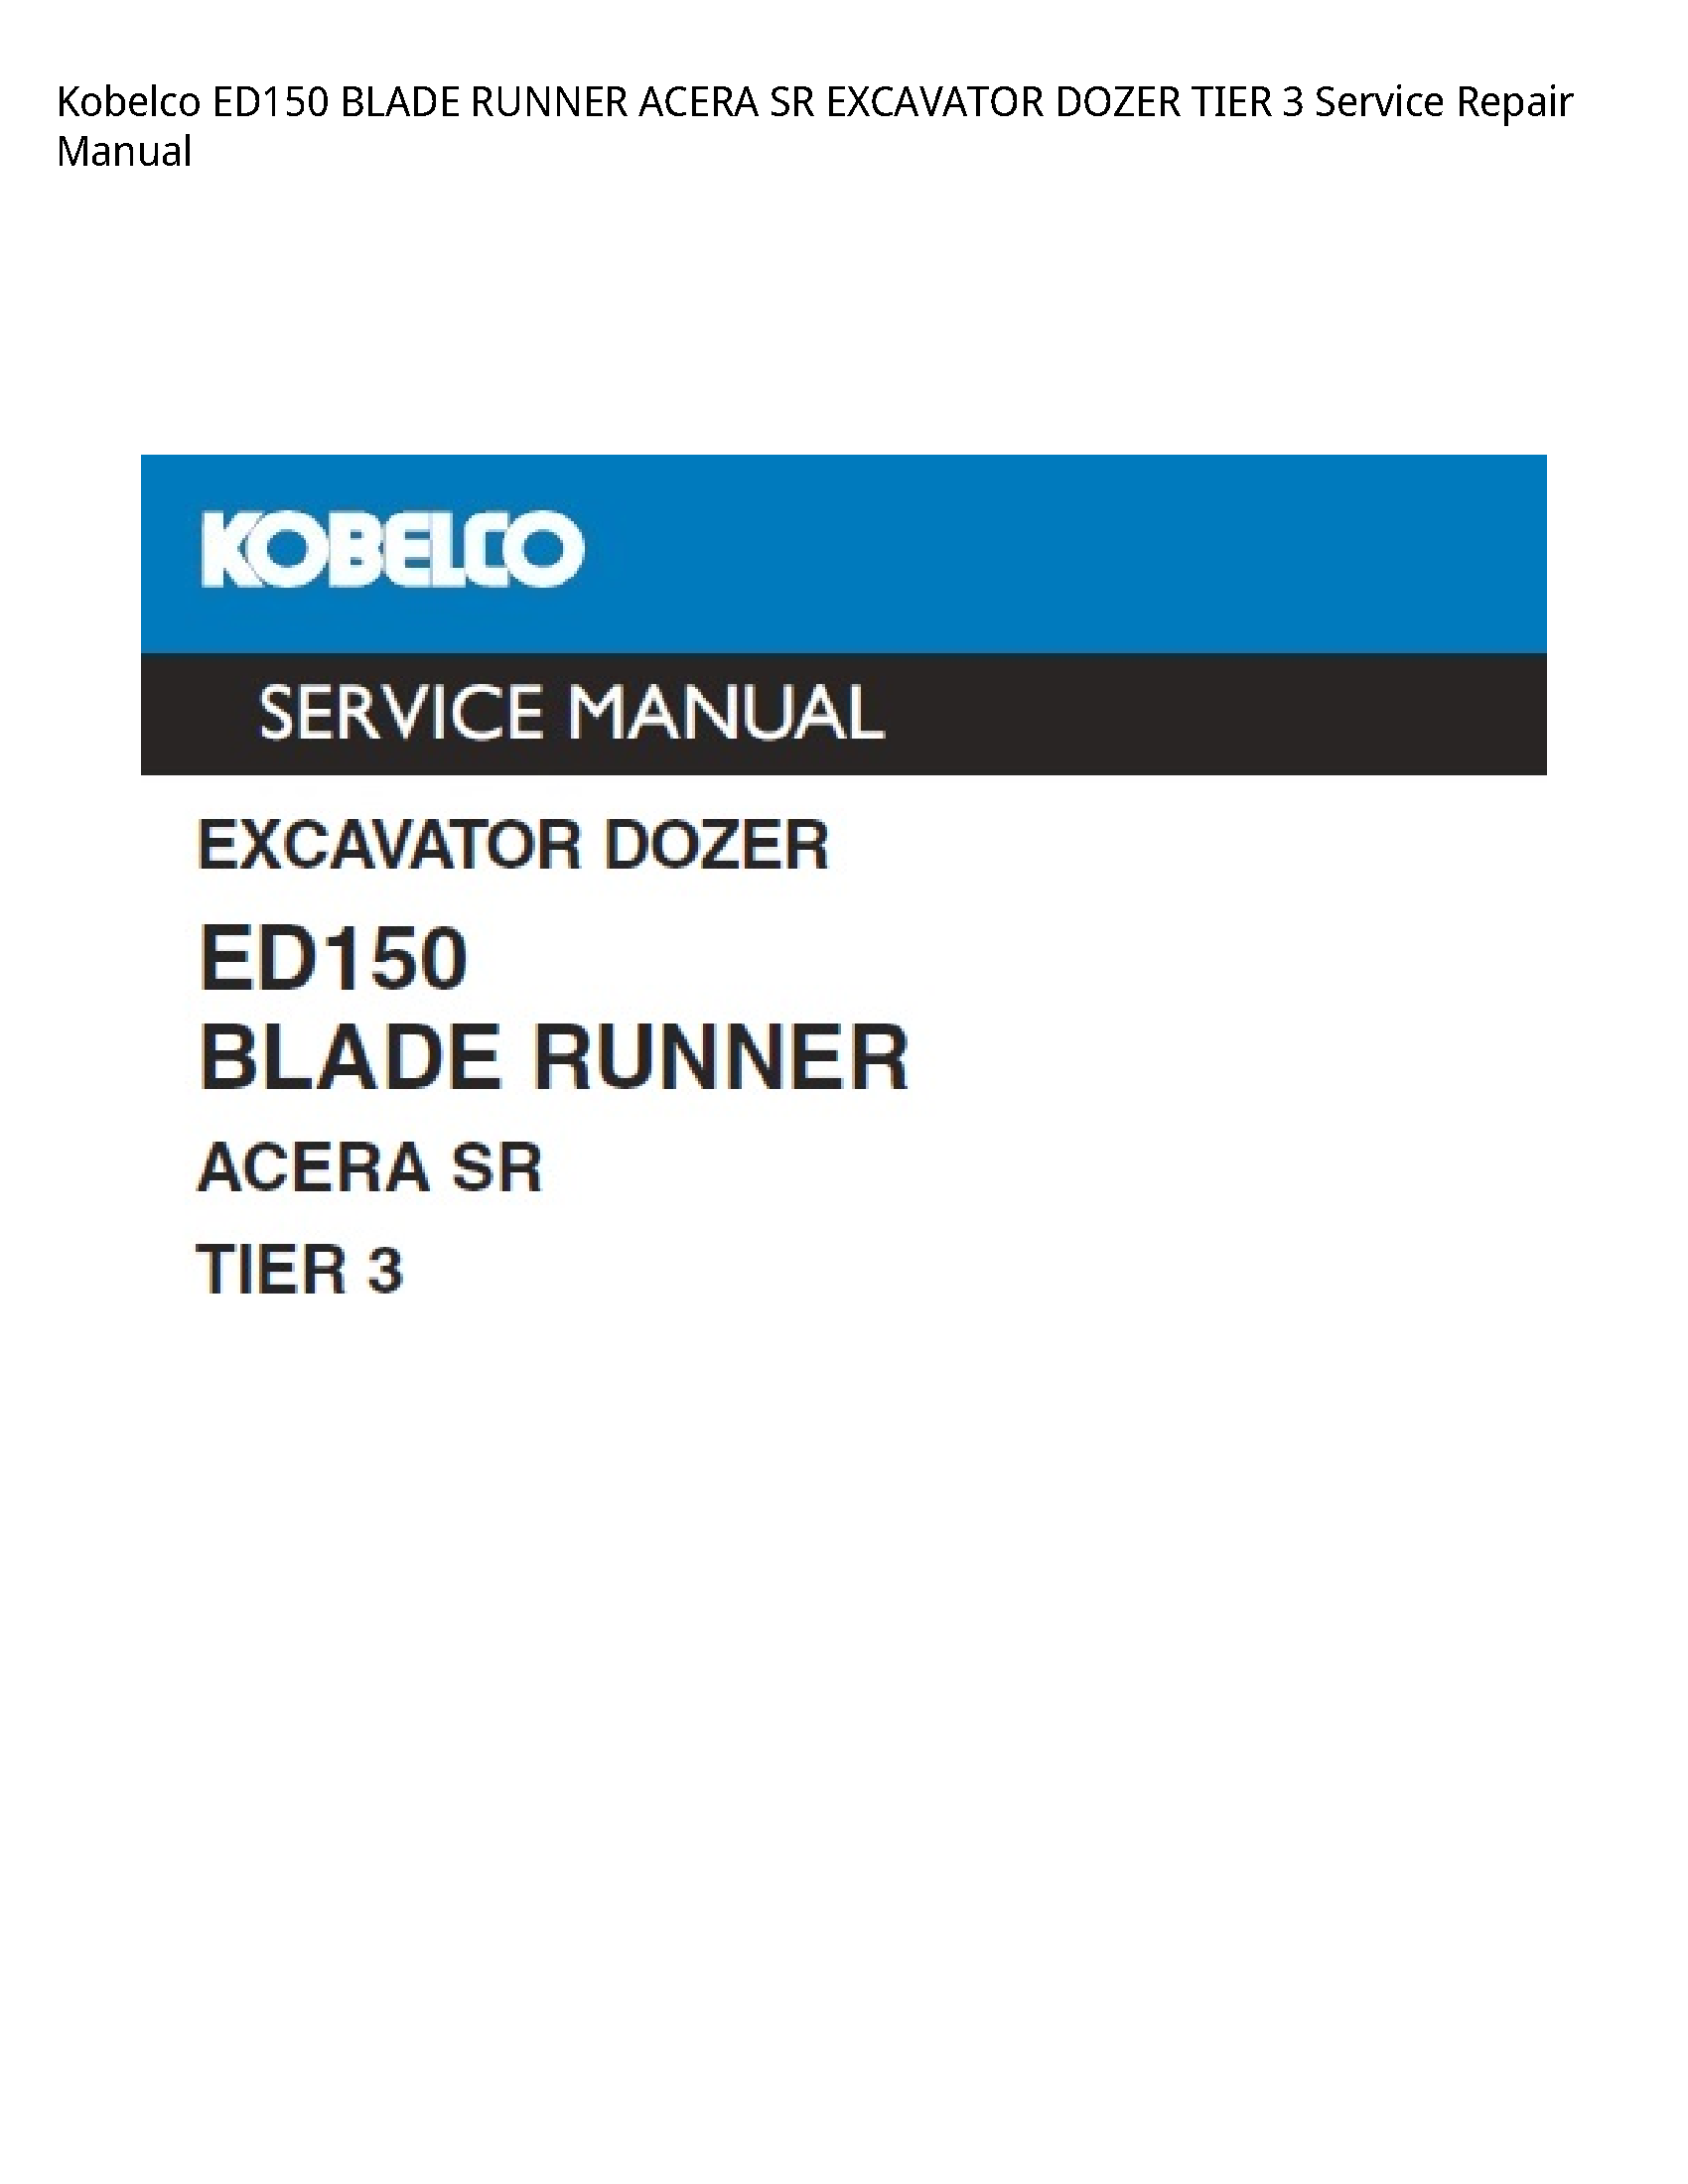 Kobelco ED150 BLADE RUNNER ACERA SR EXCAVATOR DOZER TIER manual